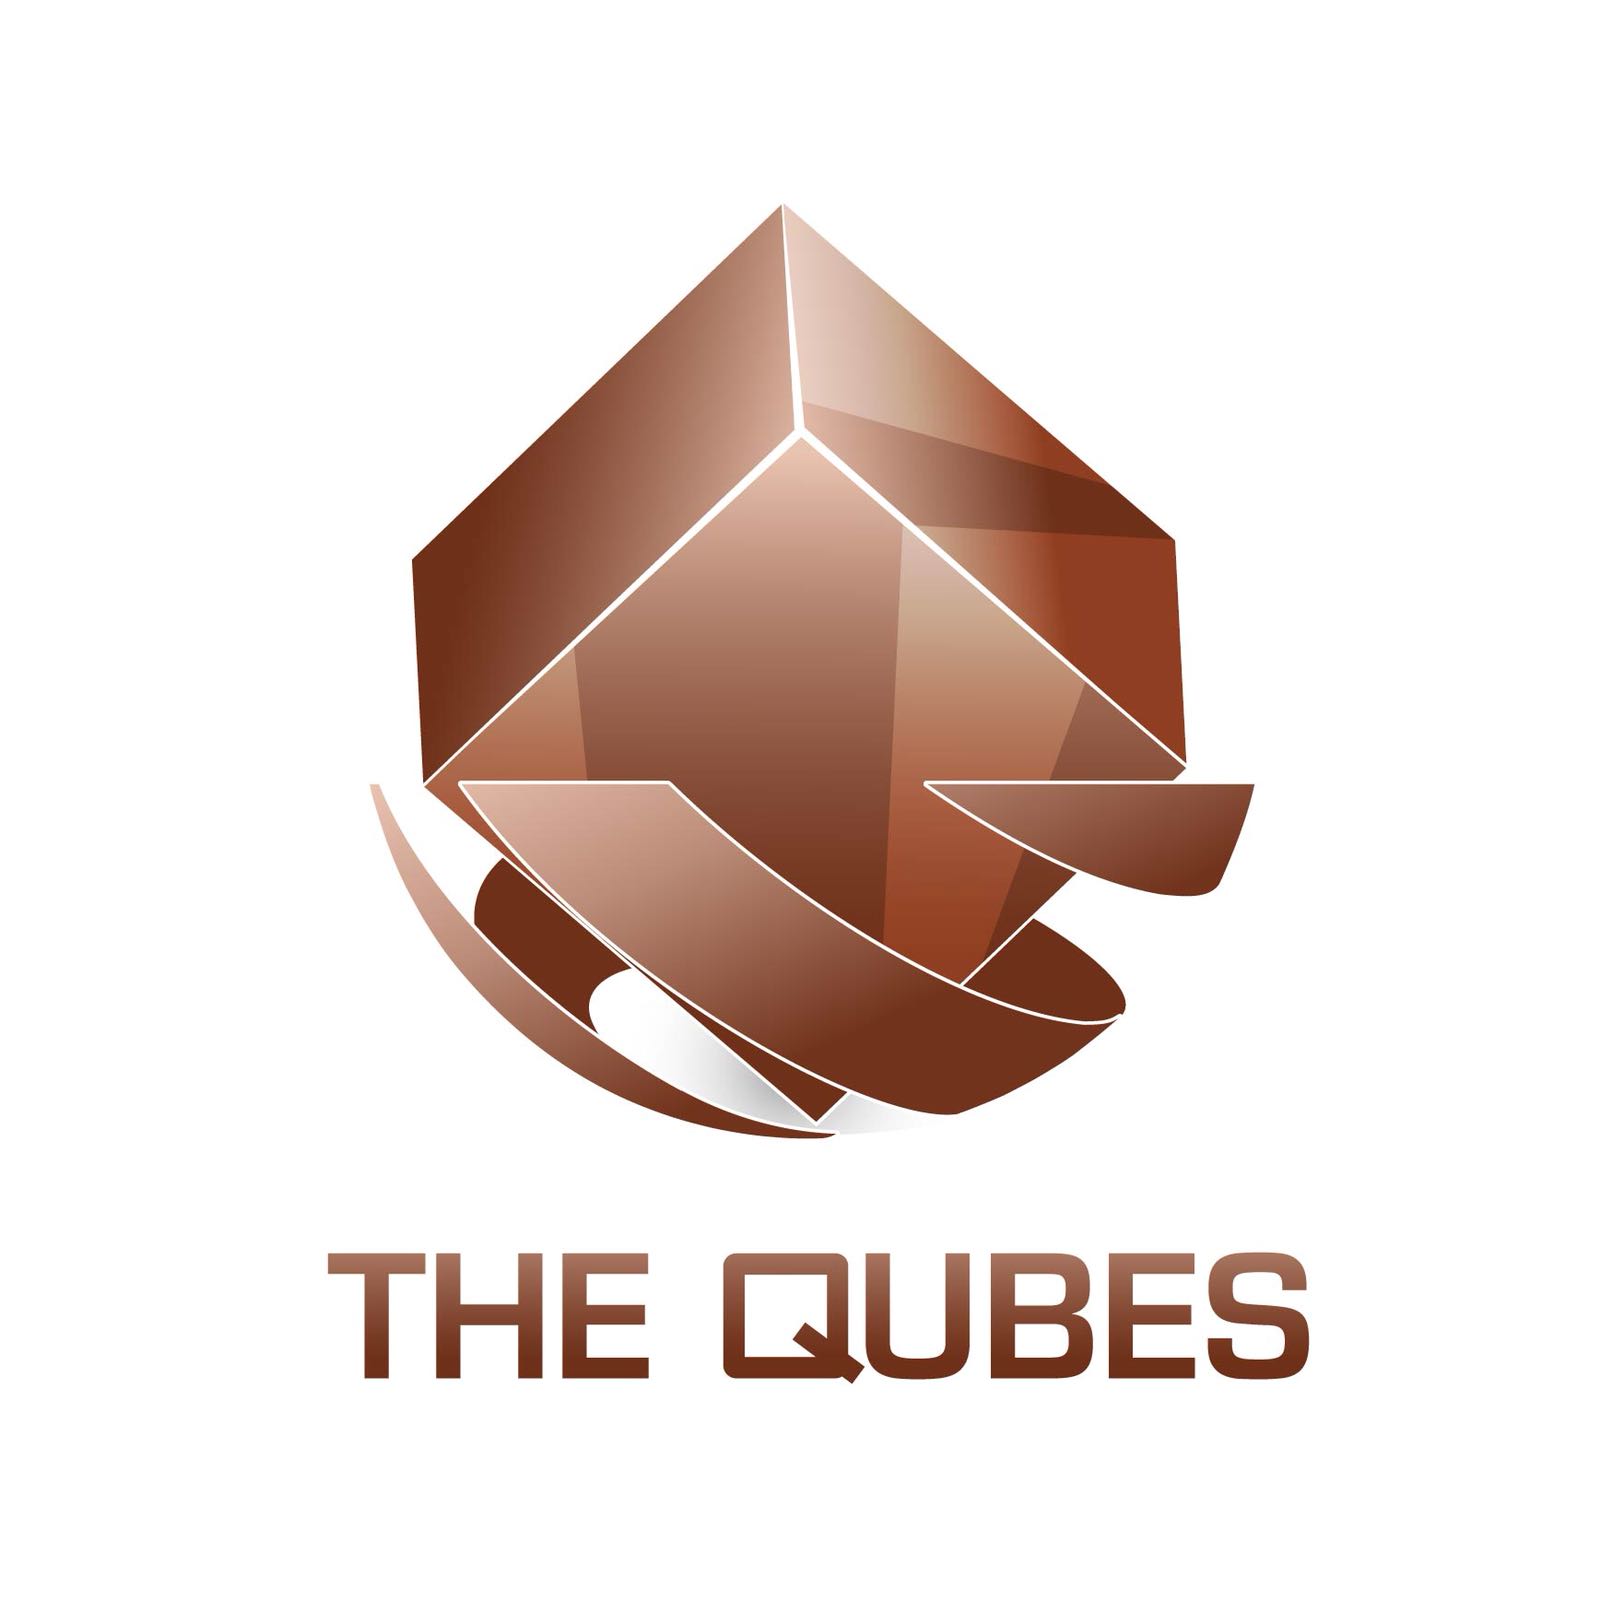 The Qubes